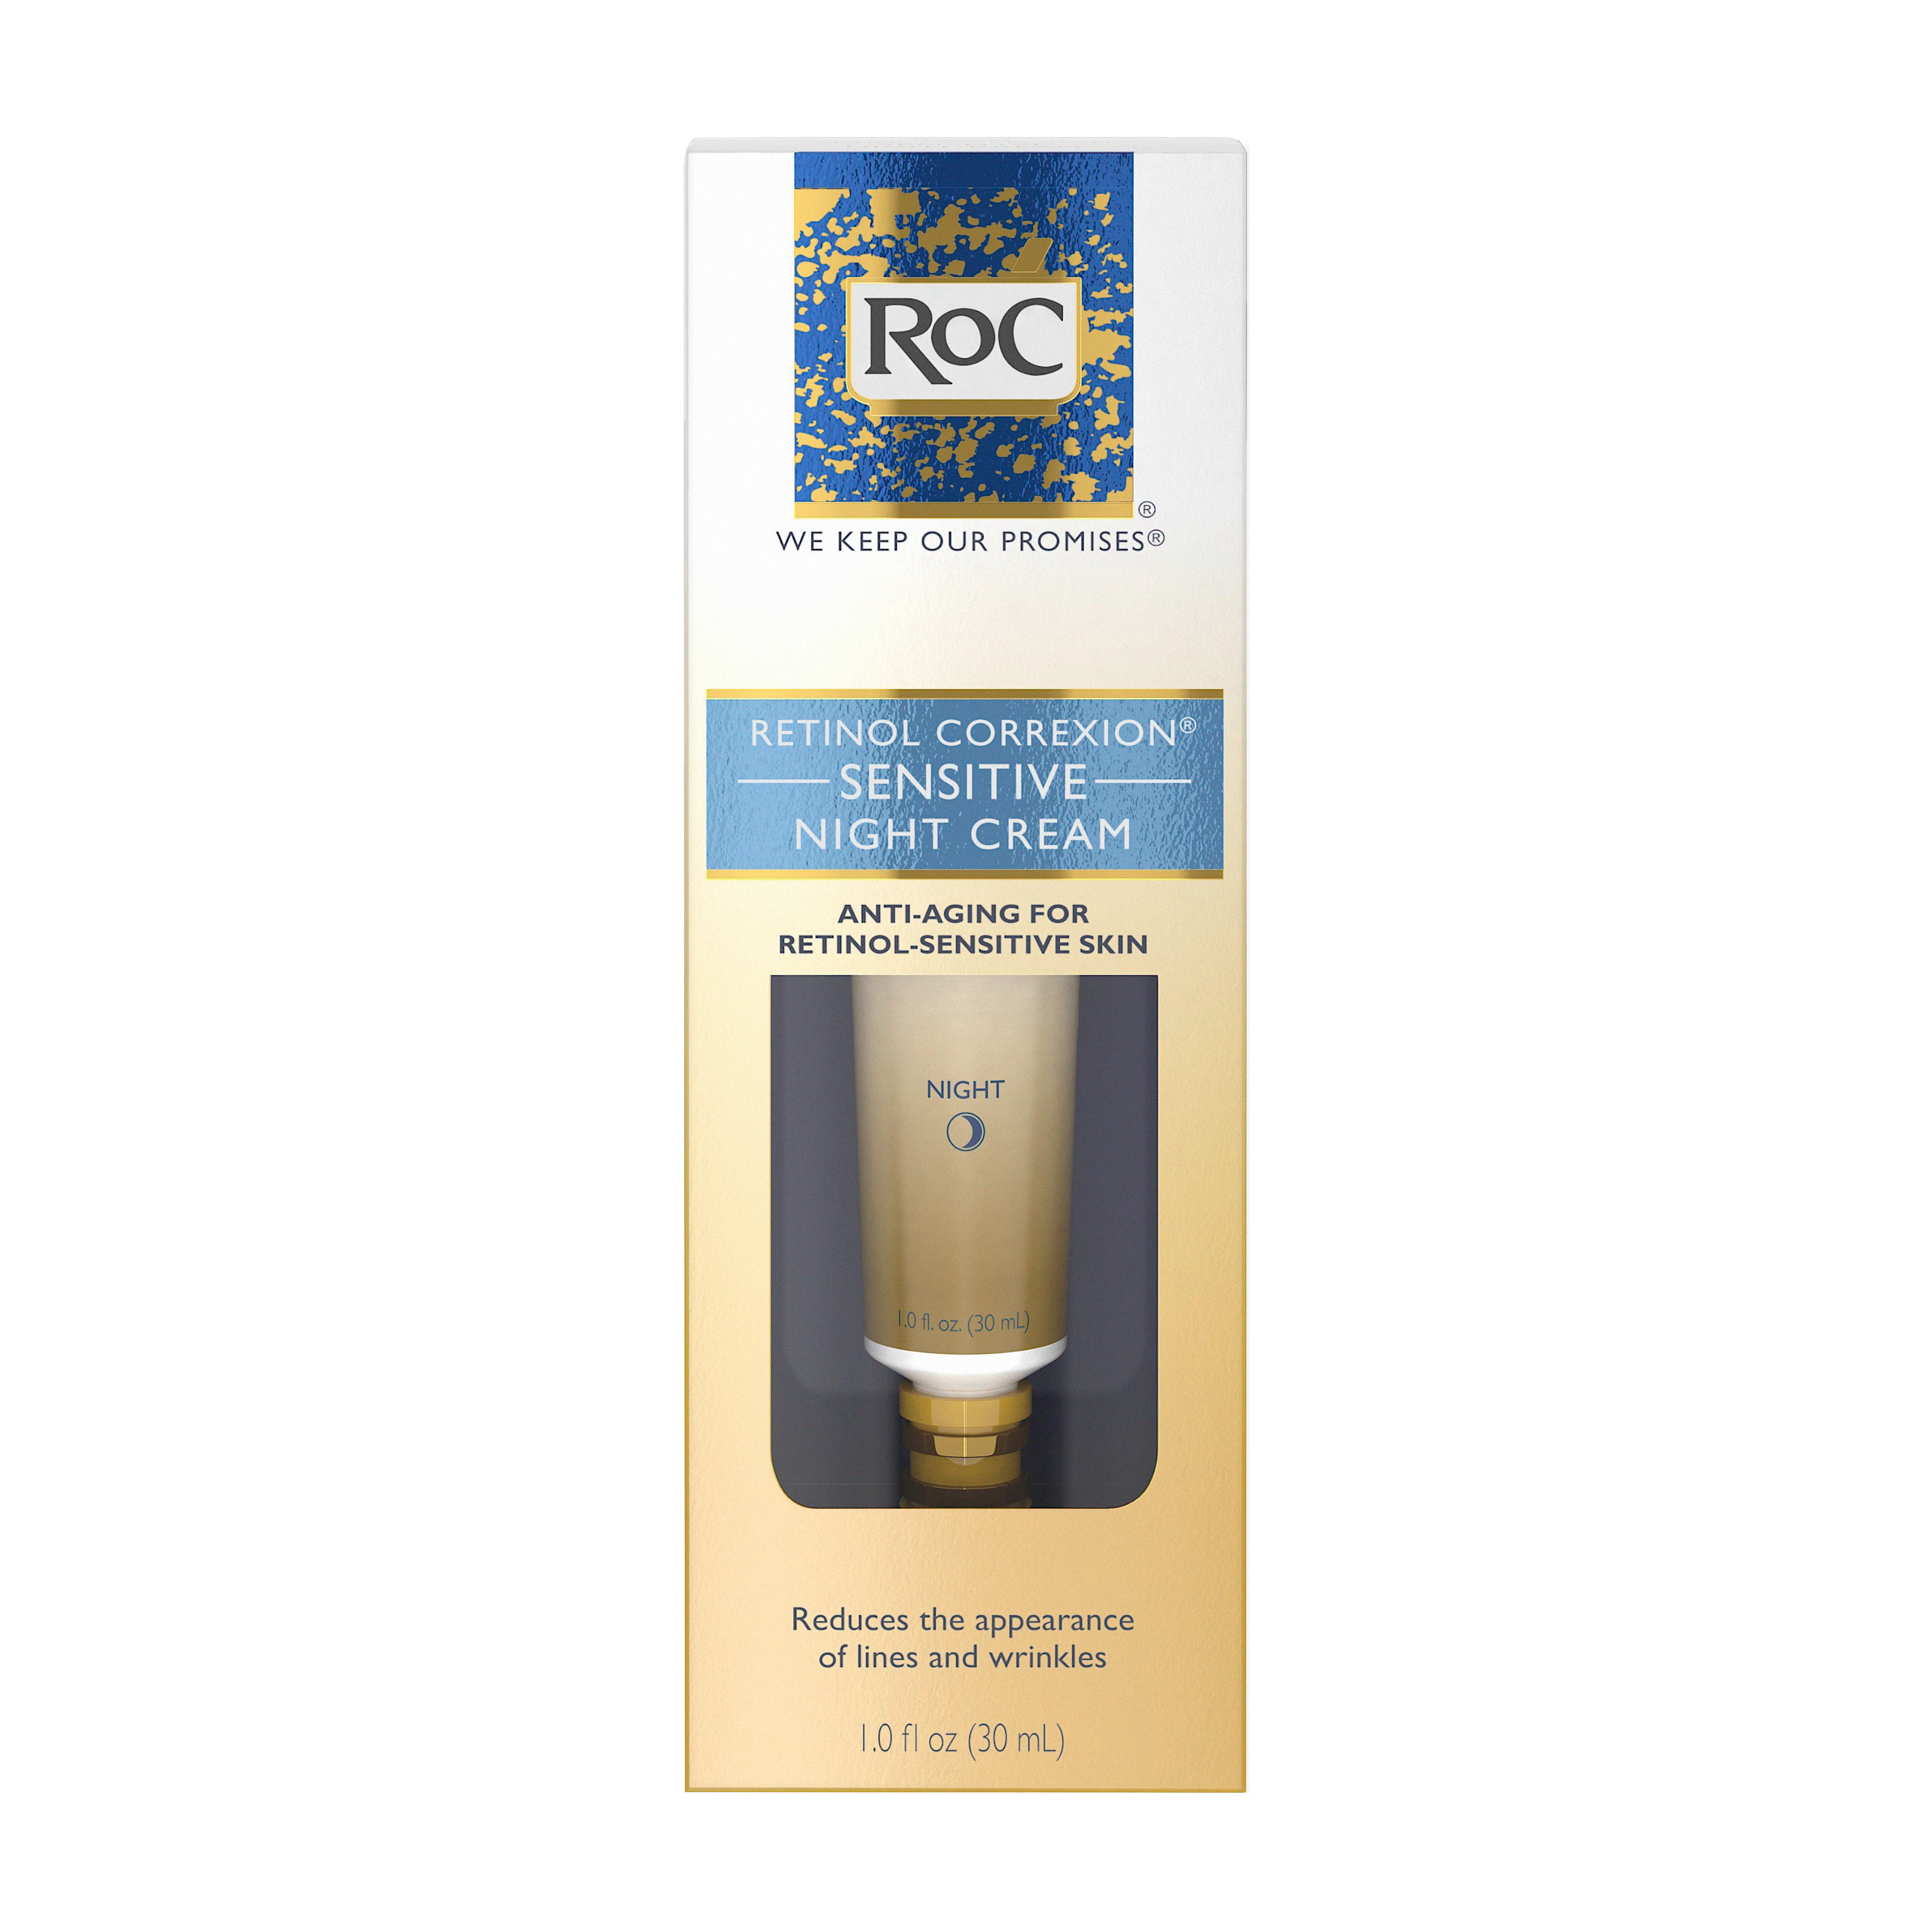 RoC Retinol Correxion Sensitive Night Cream, 1 oz - image 1 of 9